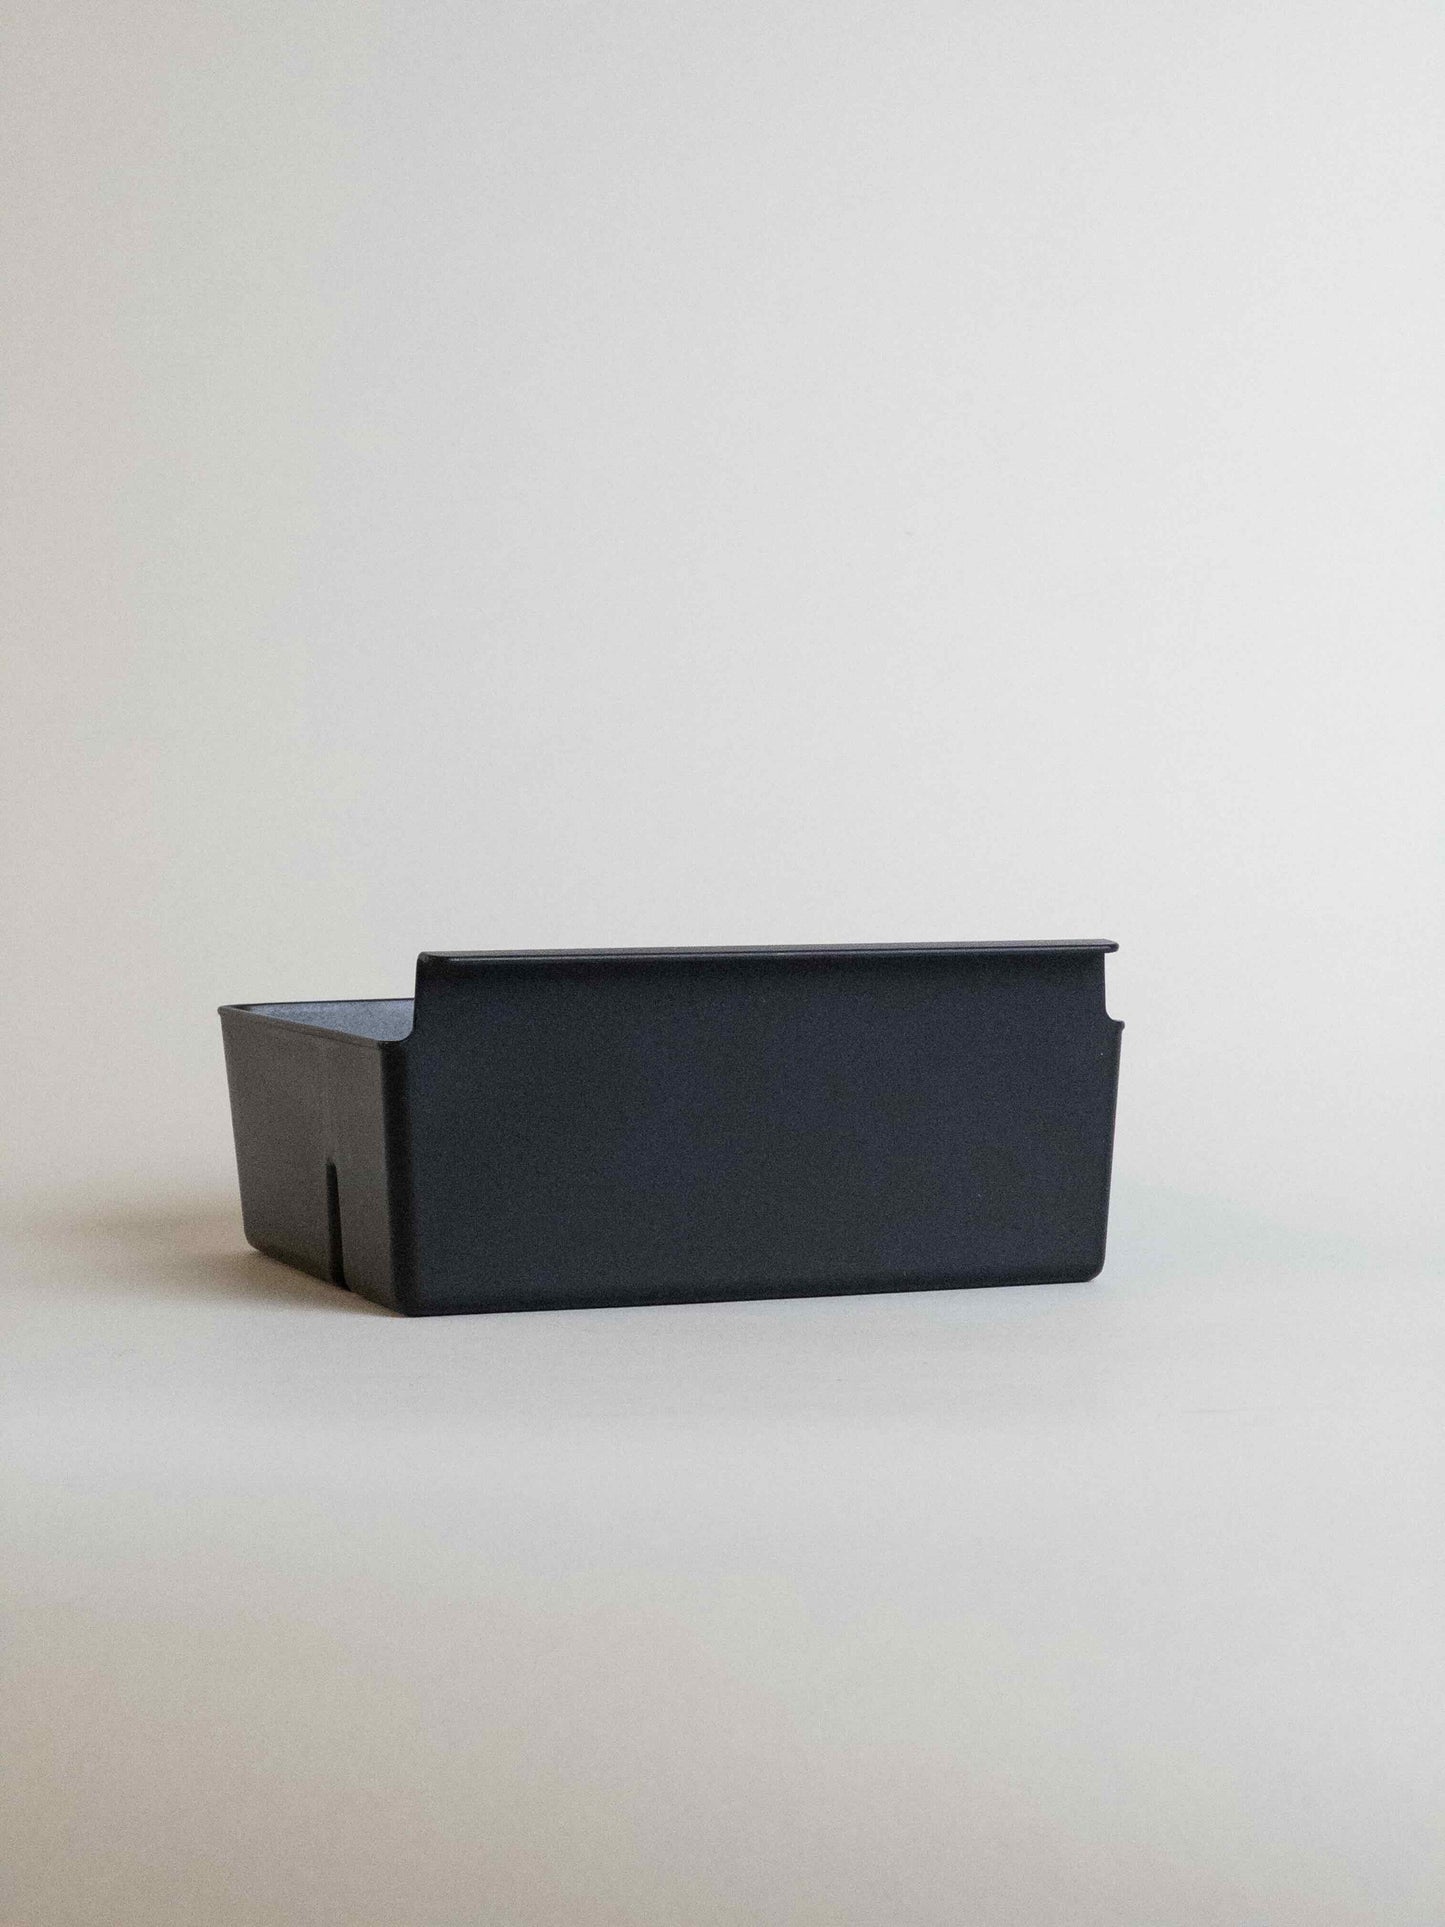 Model S/X 2021+ storage box armrest